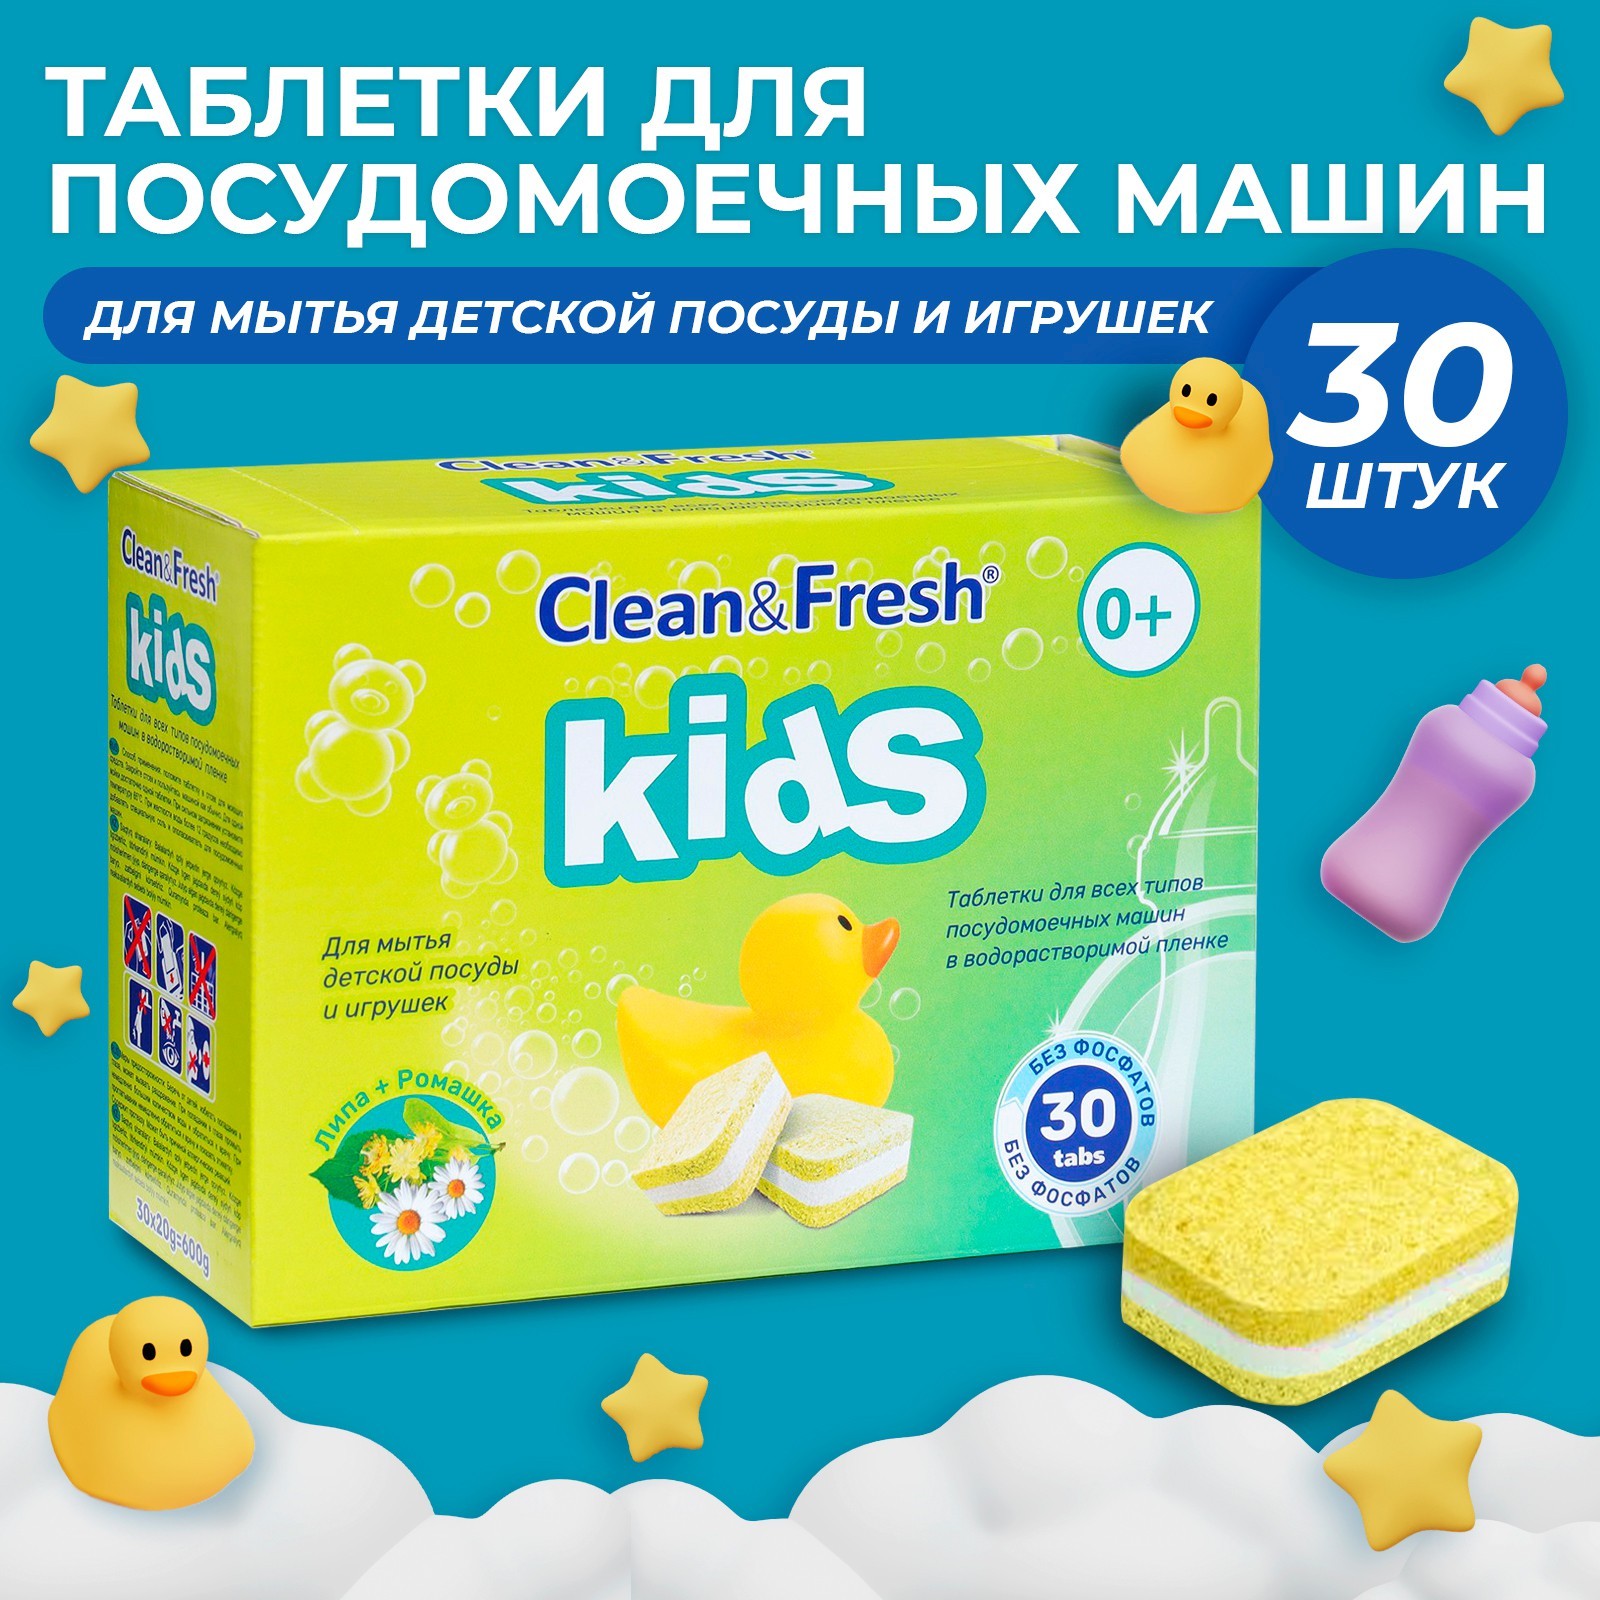 Таблетки для посудомоечных машин Clean & Fresh Kids All in 1, 30 шт таблетки mak optima 5 таблеток по 20 г